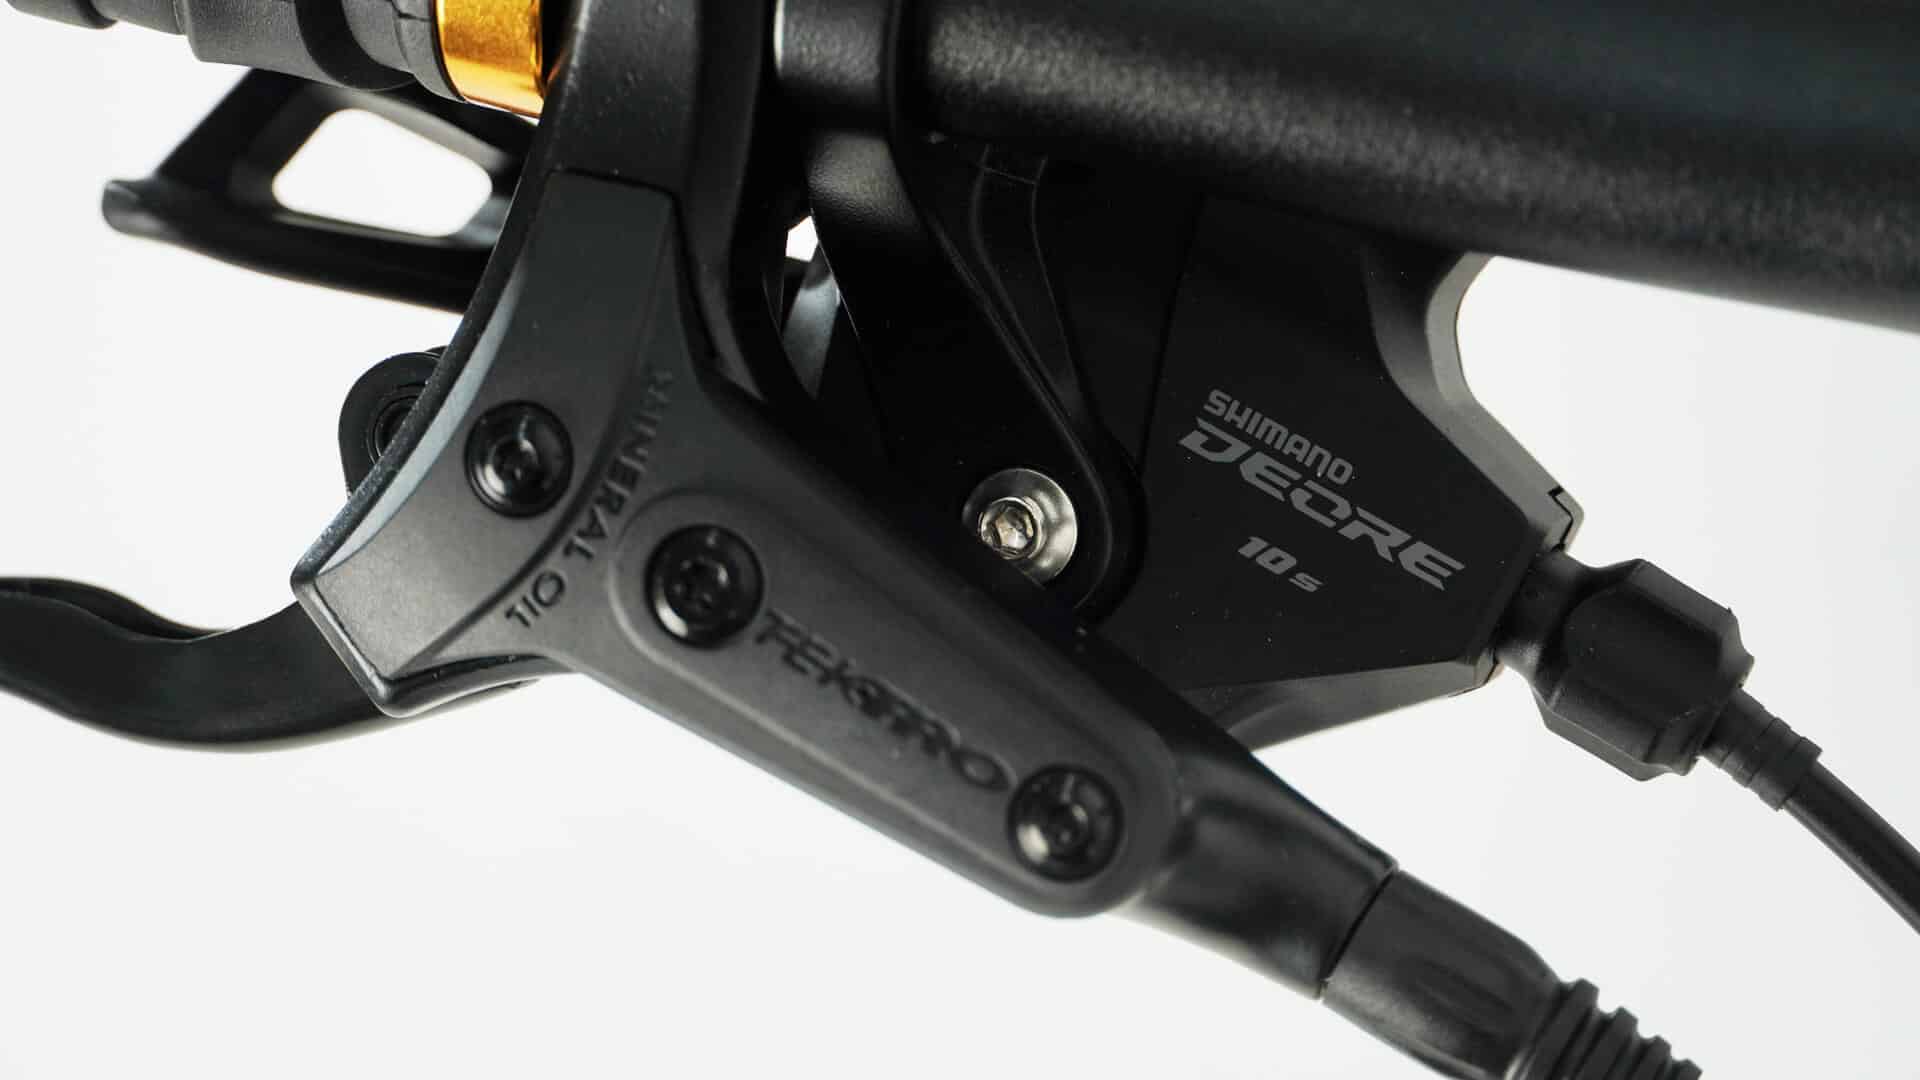 CAMP GOLD Sport (MATT GREY) foldable bicycle Tektro hydraulic brake lever